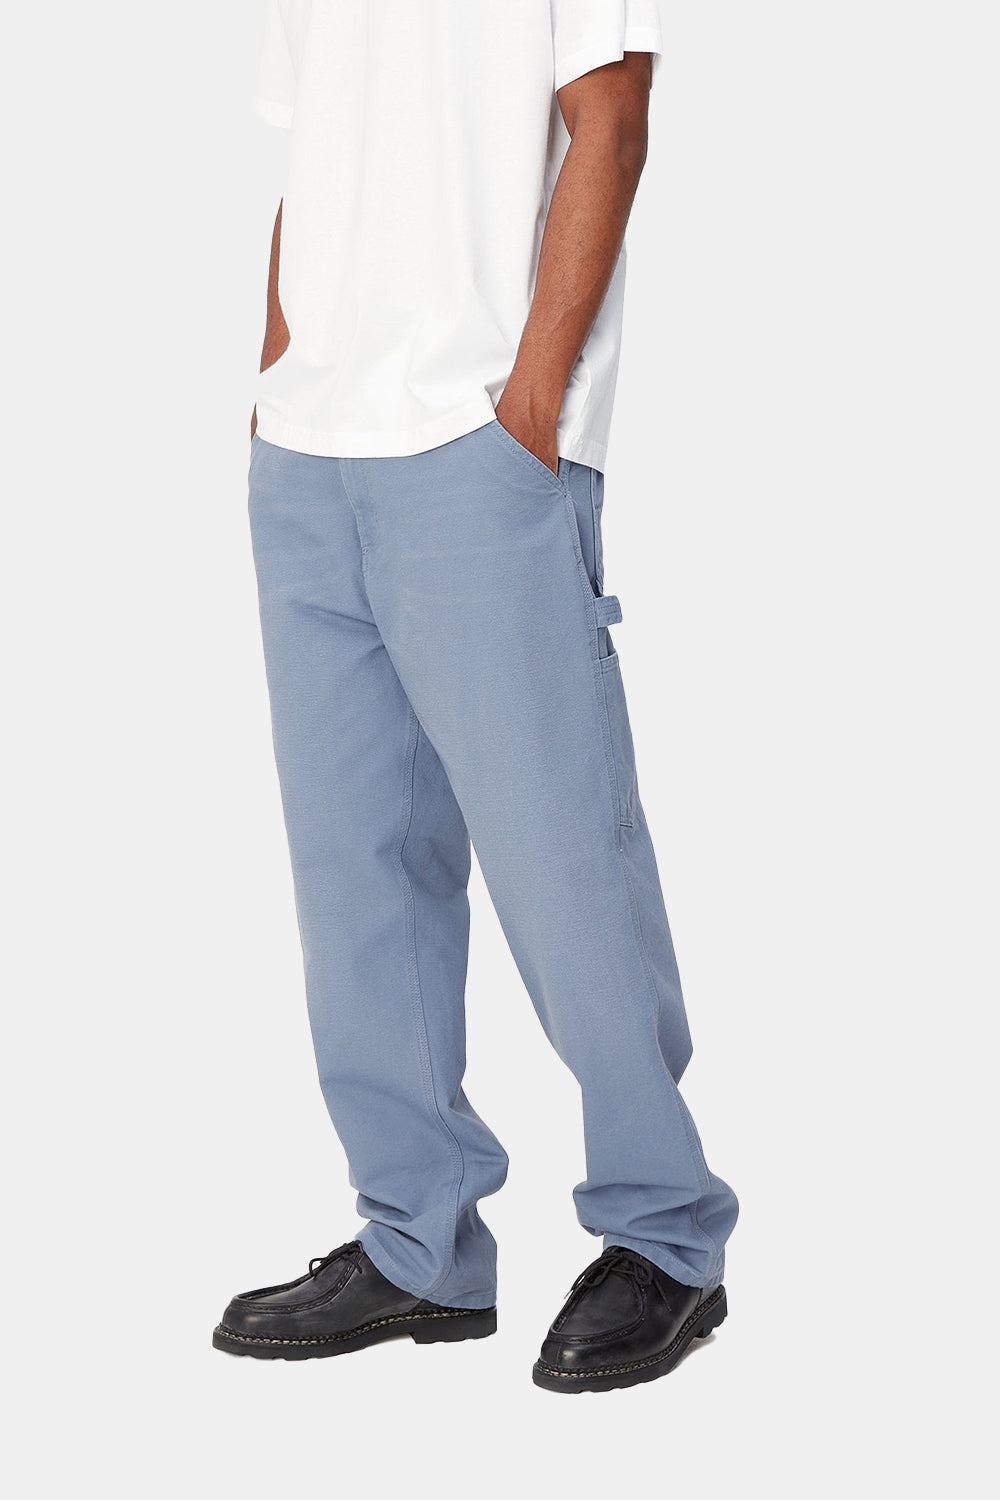 Carhartt WIP Single Knee Organic Cotton Pant (Bay Blue)
